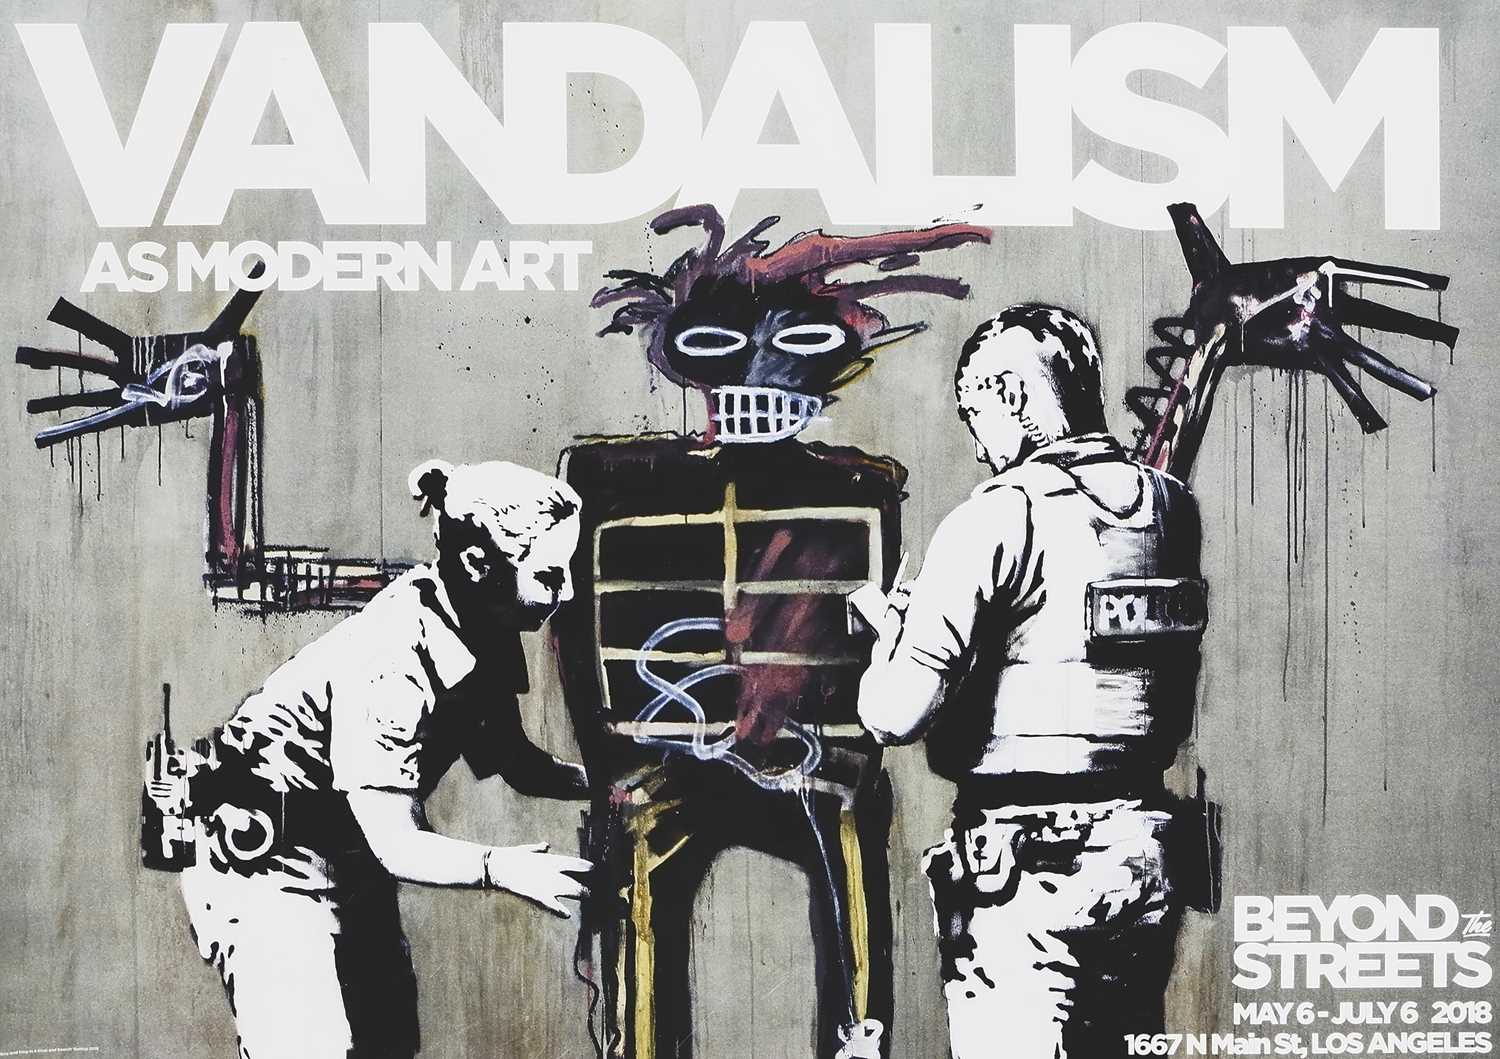 Lot 71 - Banksy (British 1974-), 'Vandalism As Modern Art', 2018